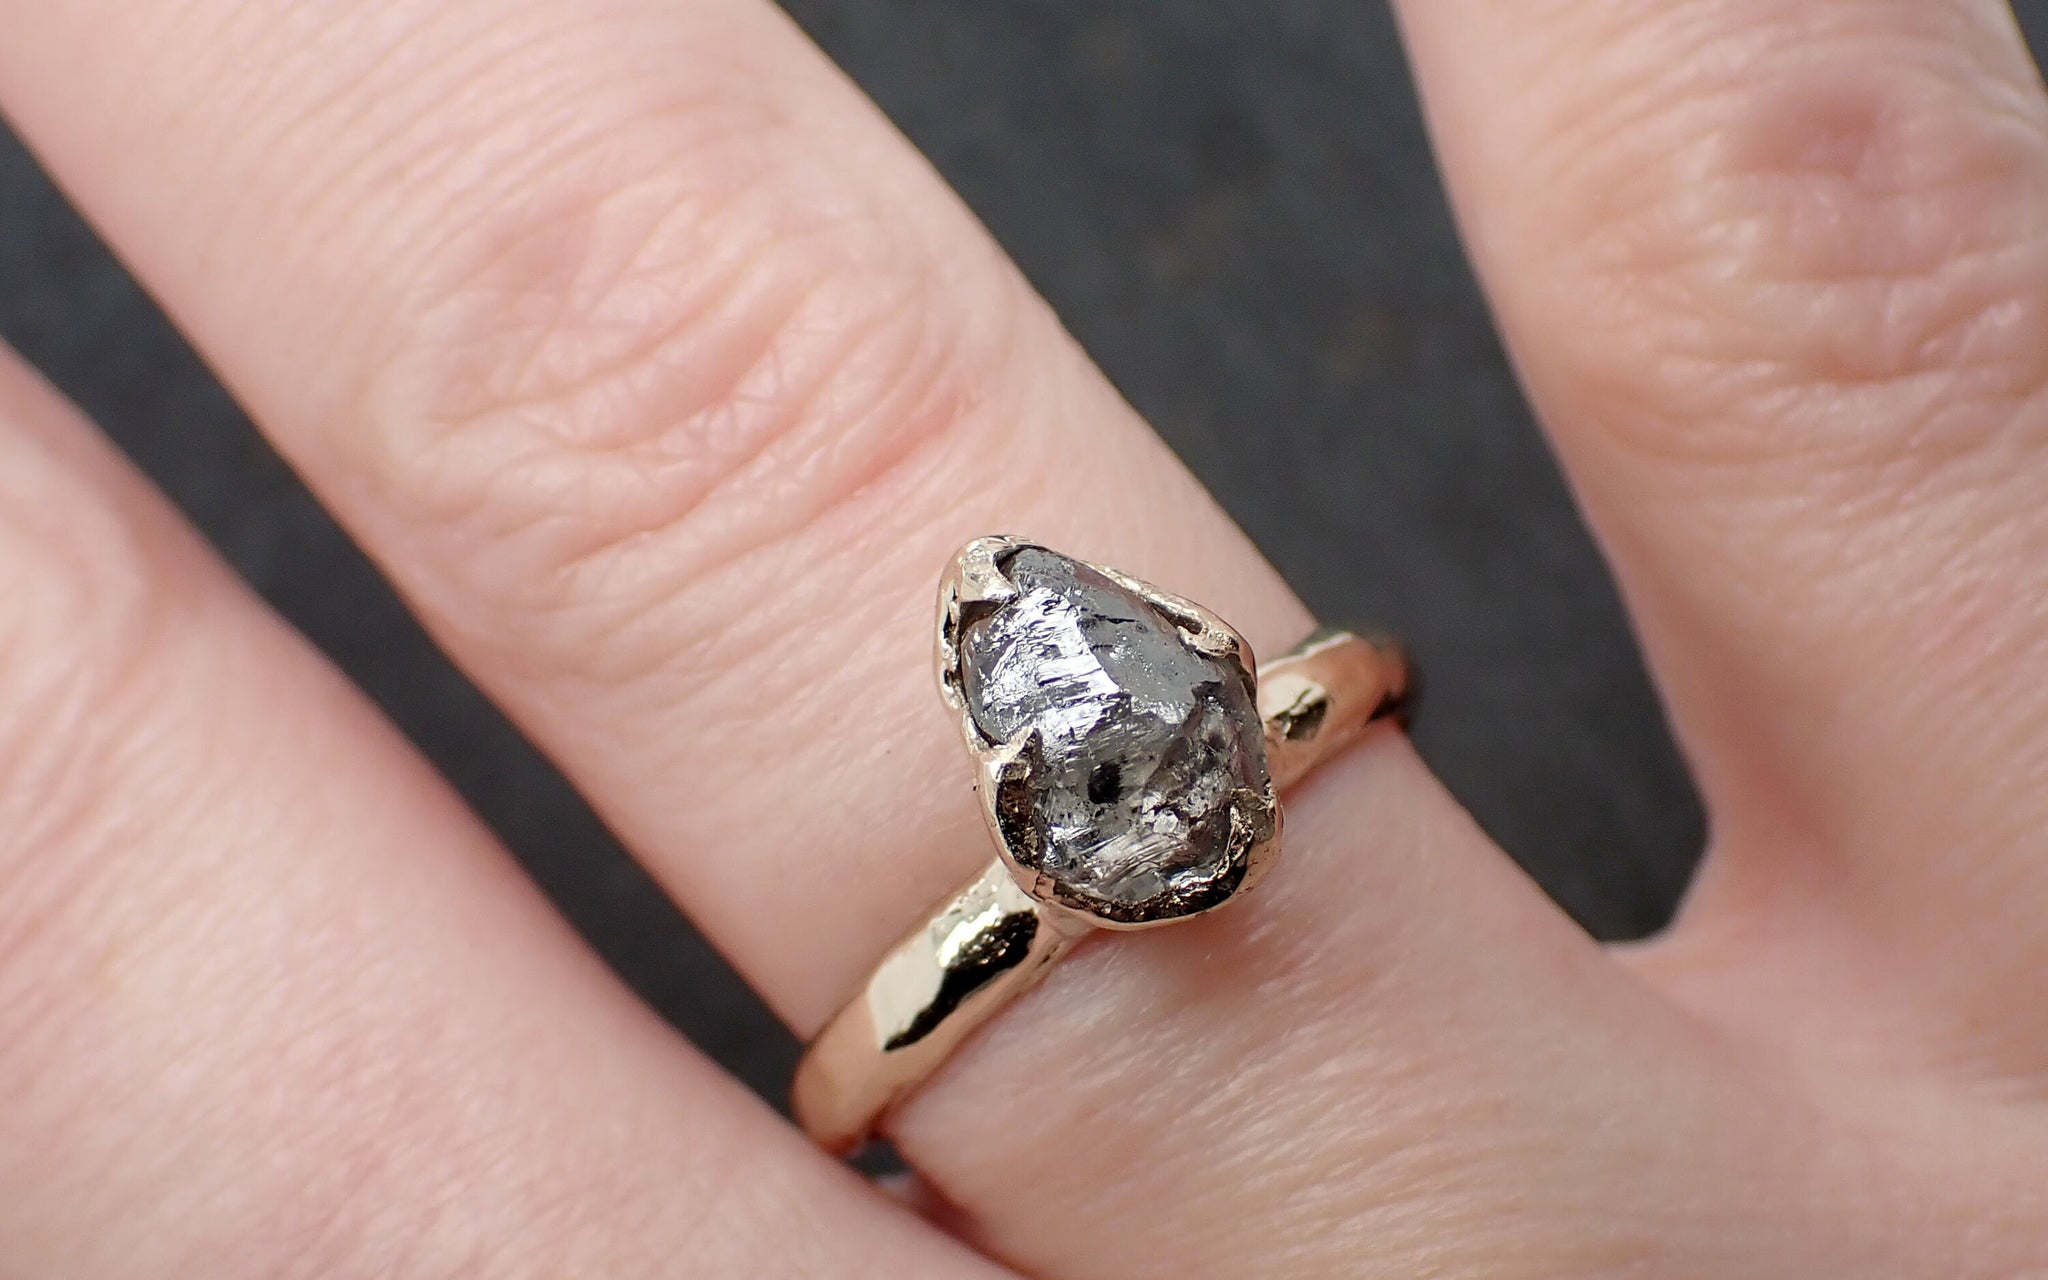 Raw salt and pepper Diamond Solitaire Engagement Ring 18k White Gold Rough Diamond ring byAngeline 3449